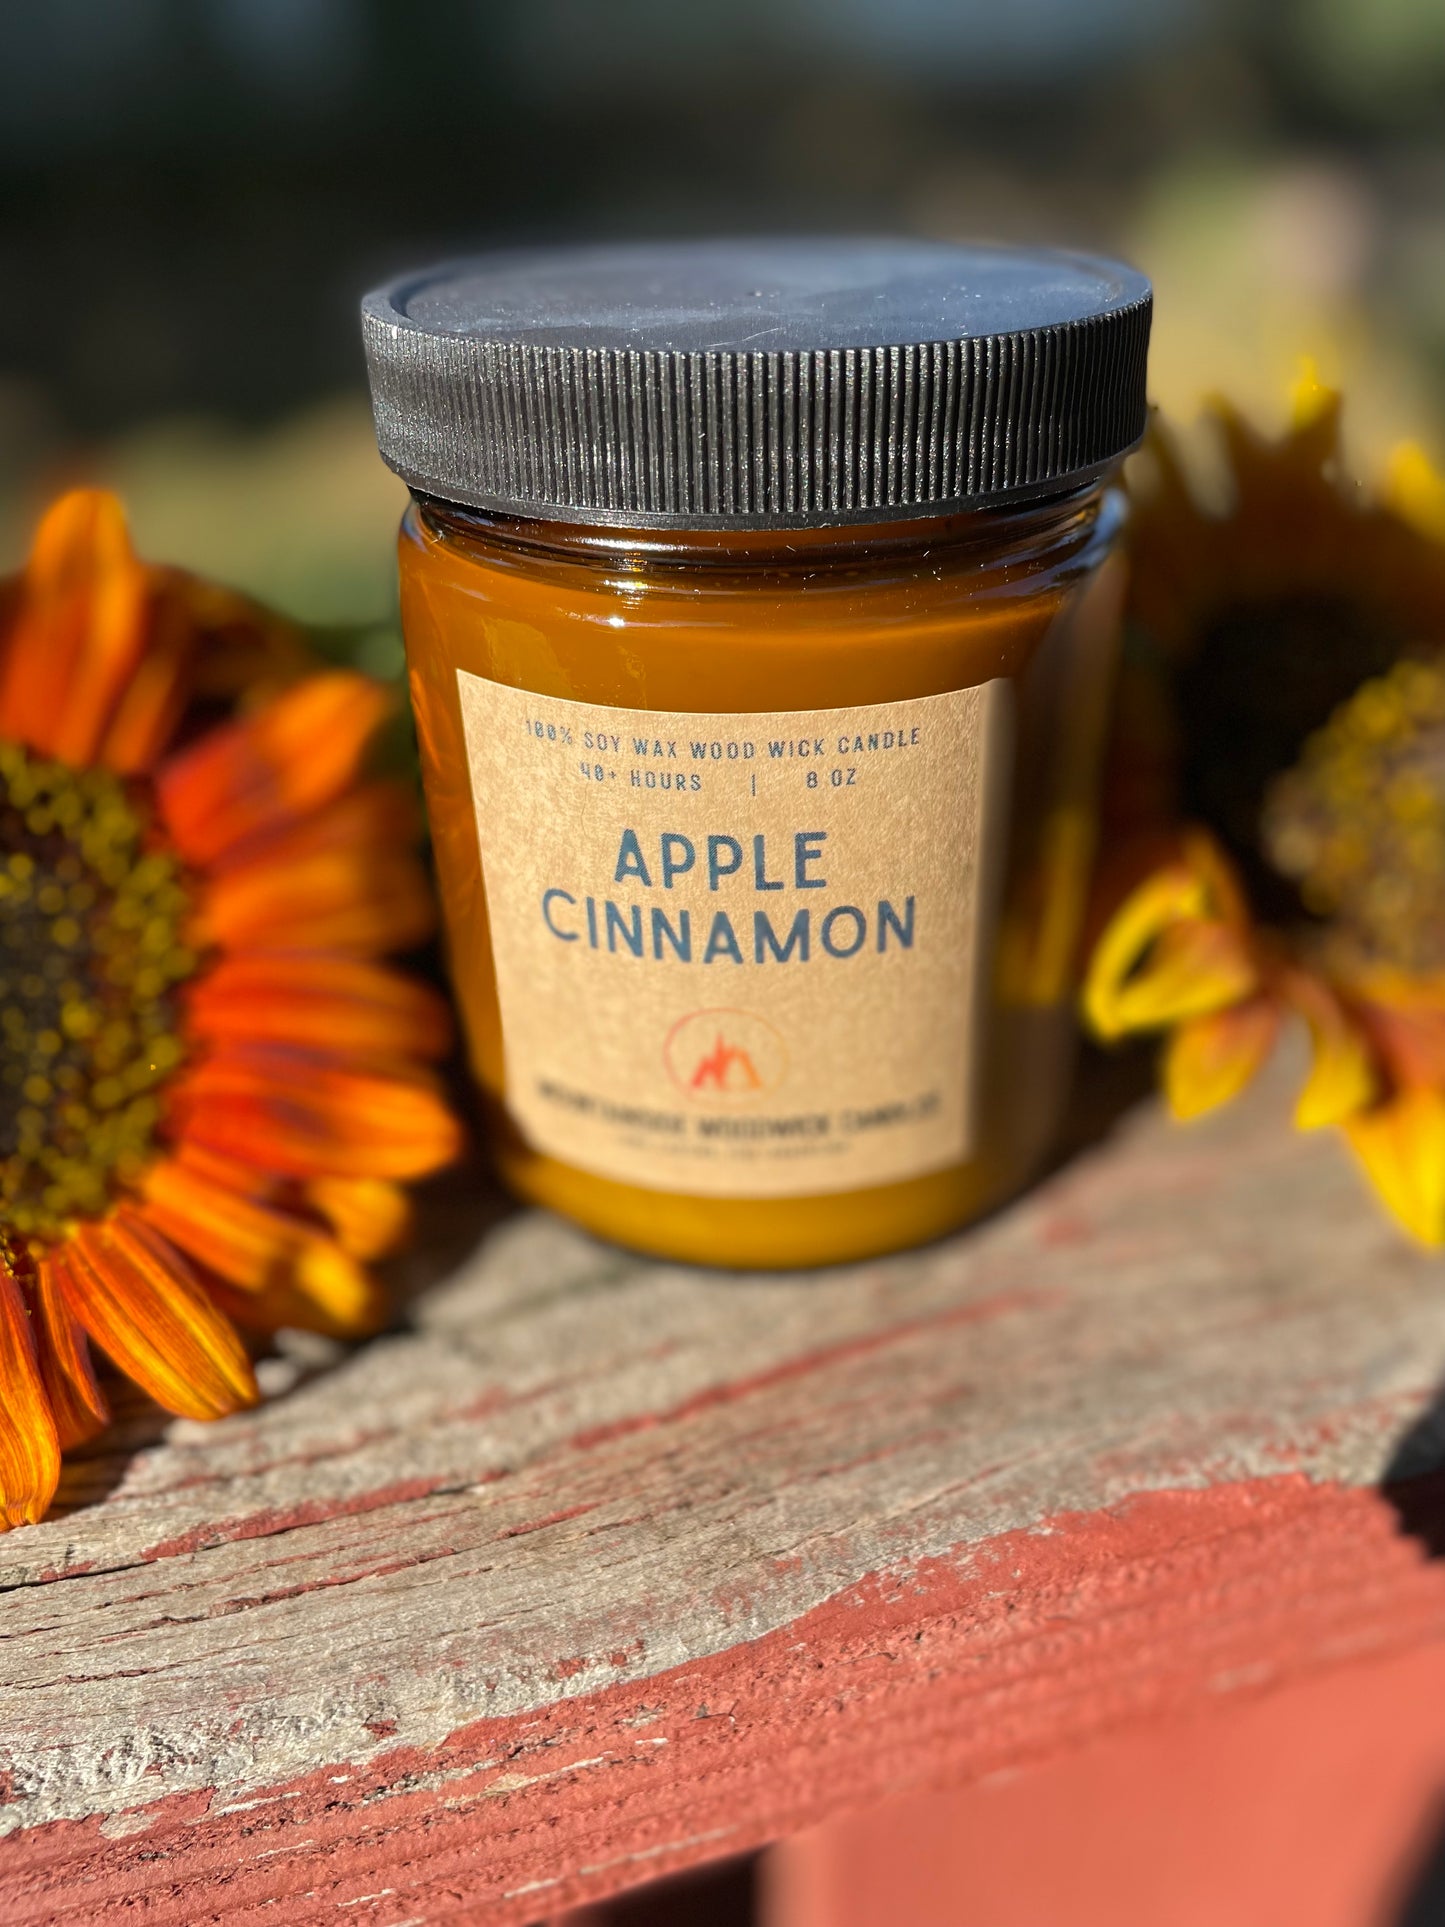 Apple Cinnamon (8 oz.) - Small Wood Wick Candle